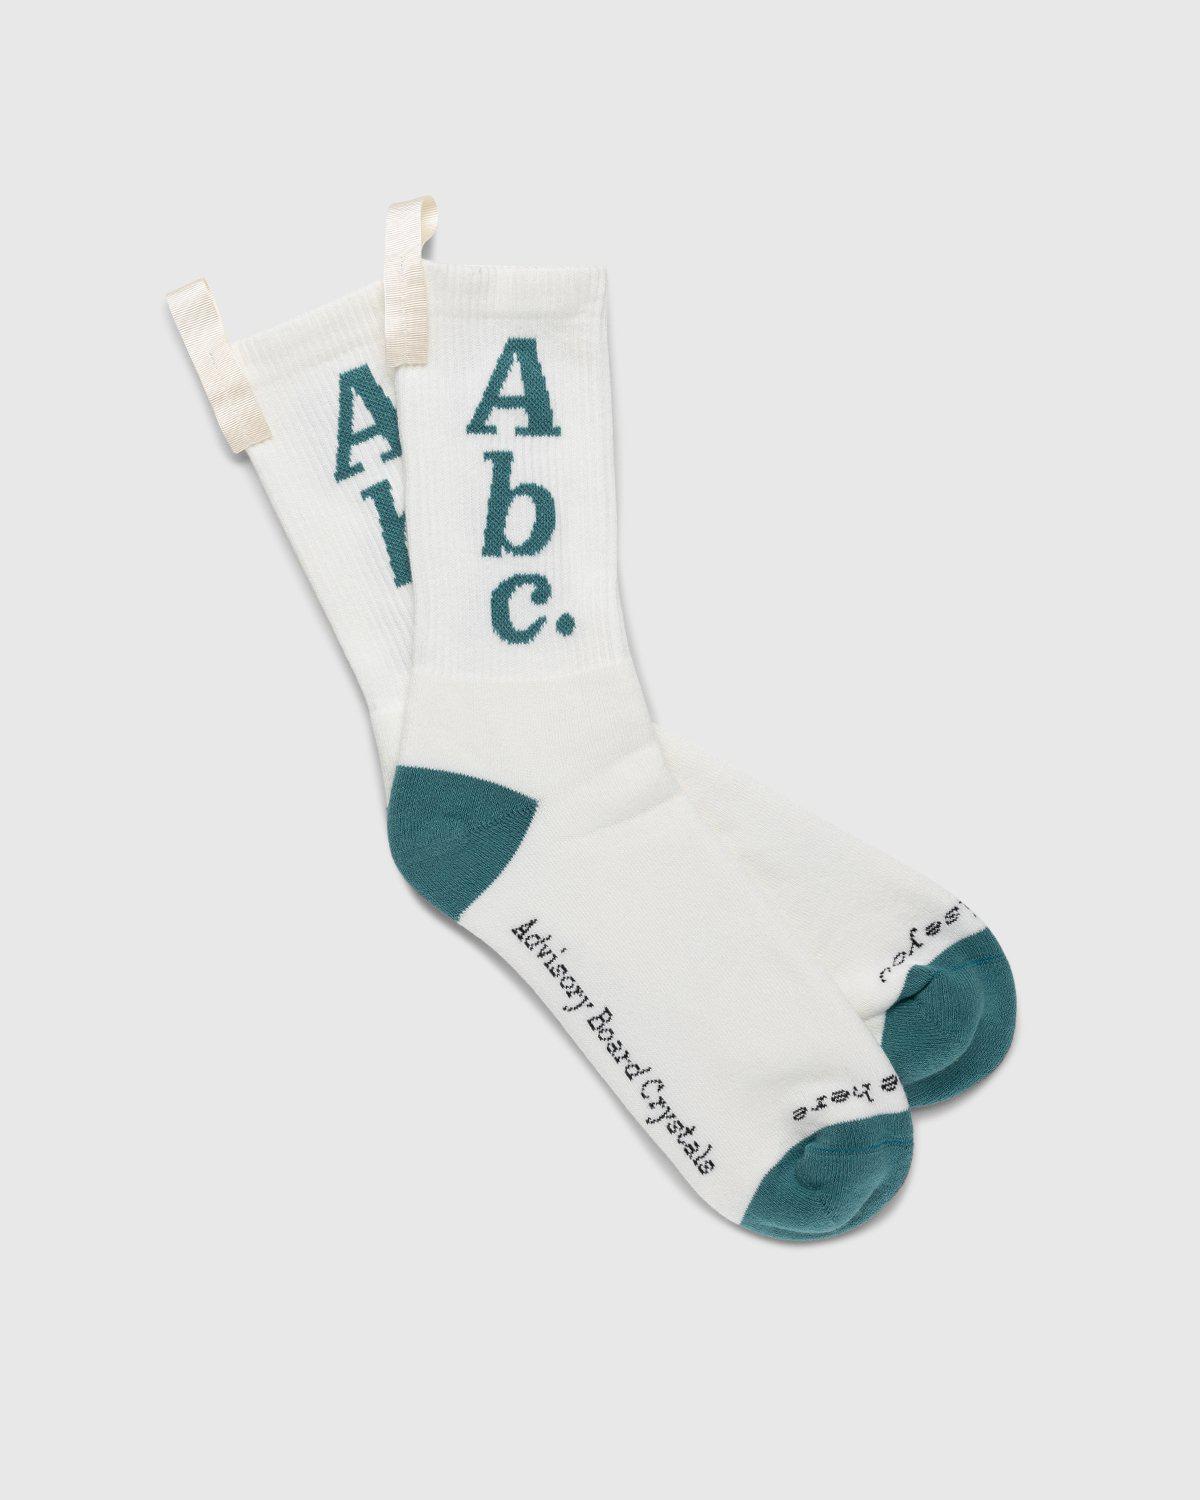 Abc. – Crew Socks Selenite/Apatite by ABC.